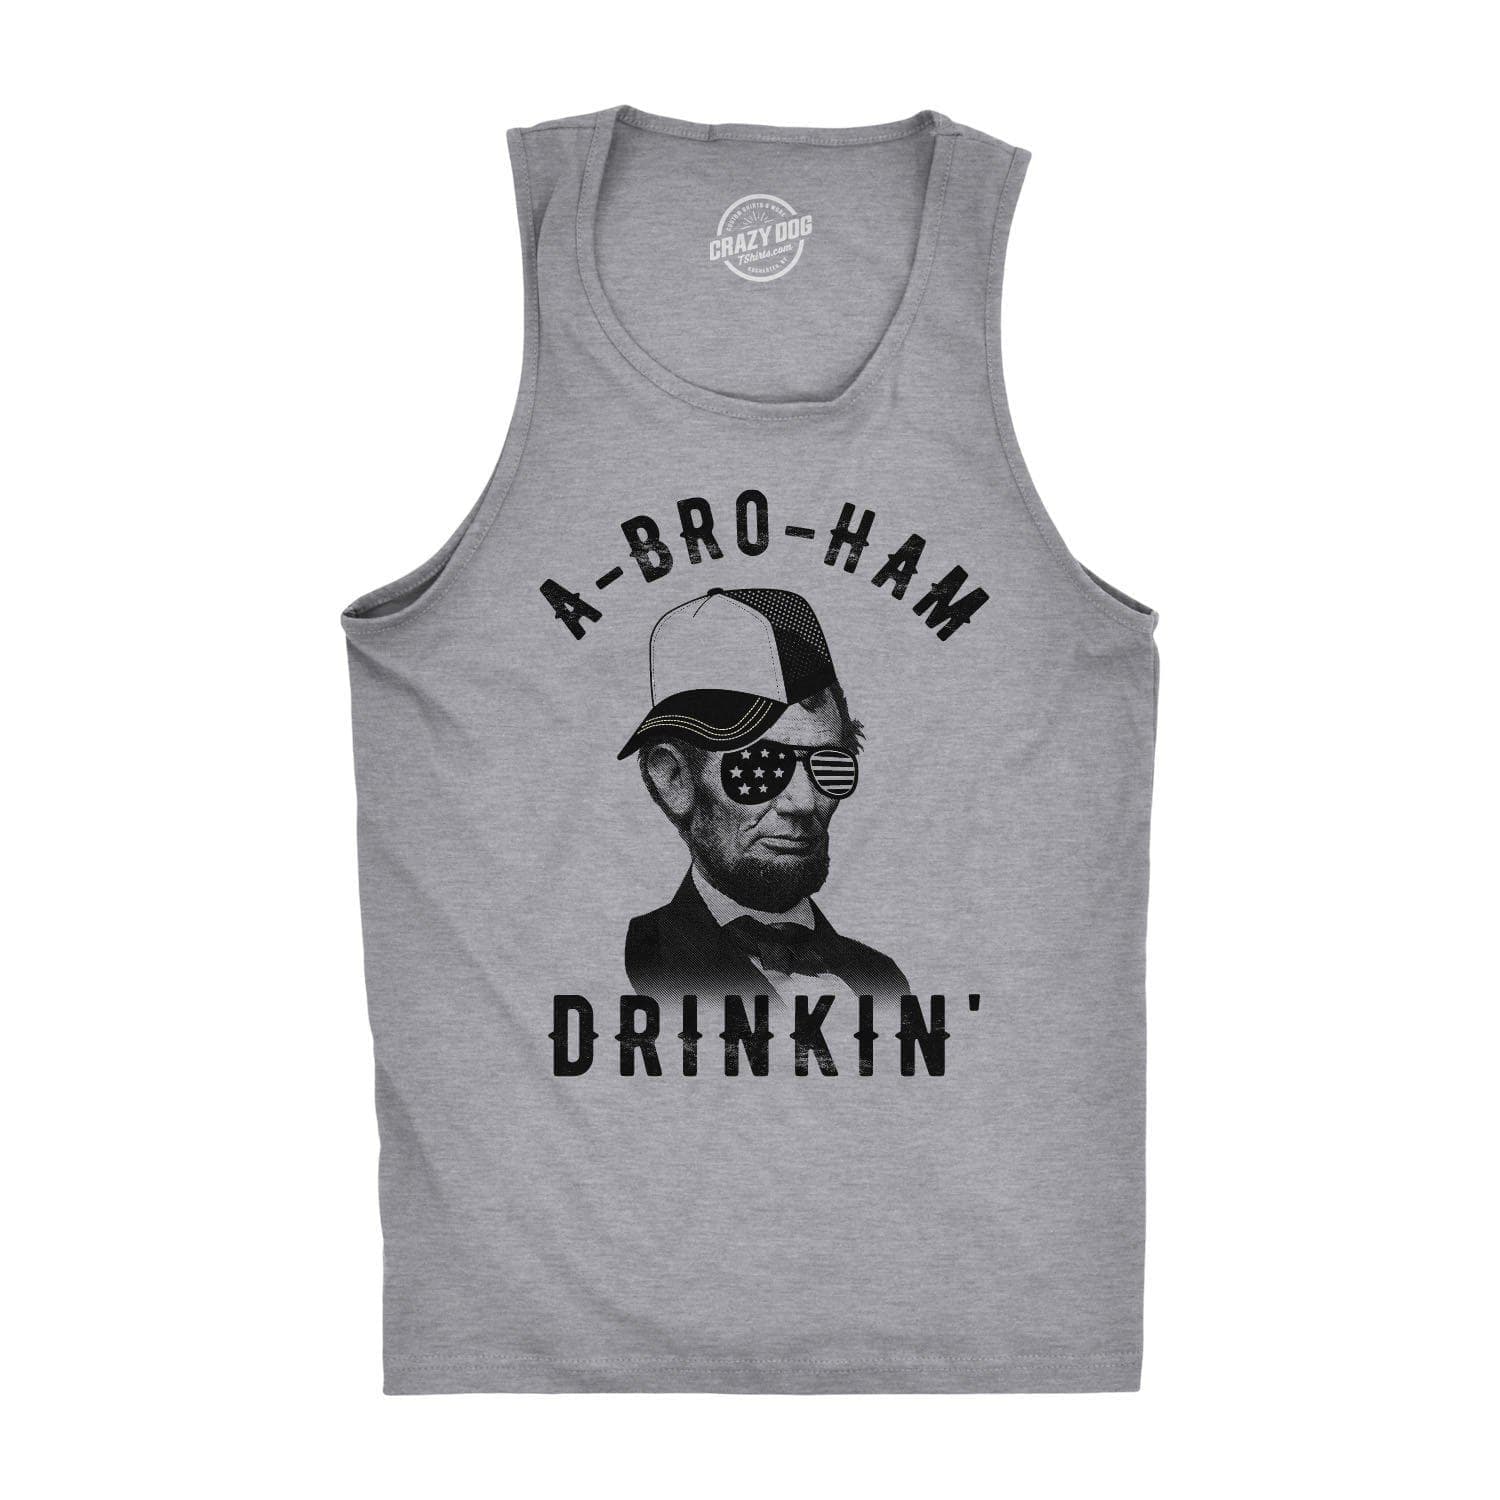 A-Bro-Ham Drinkin Men's Tank Top - Crazy Dog T-Shirts